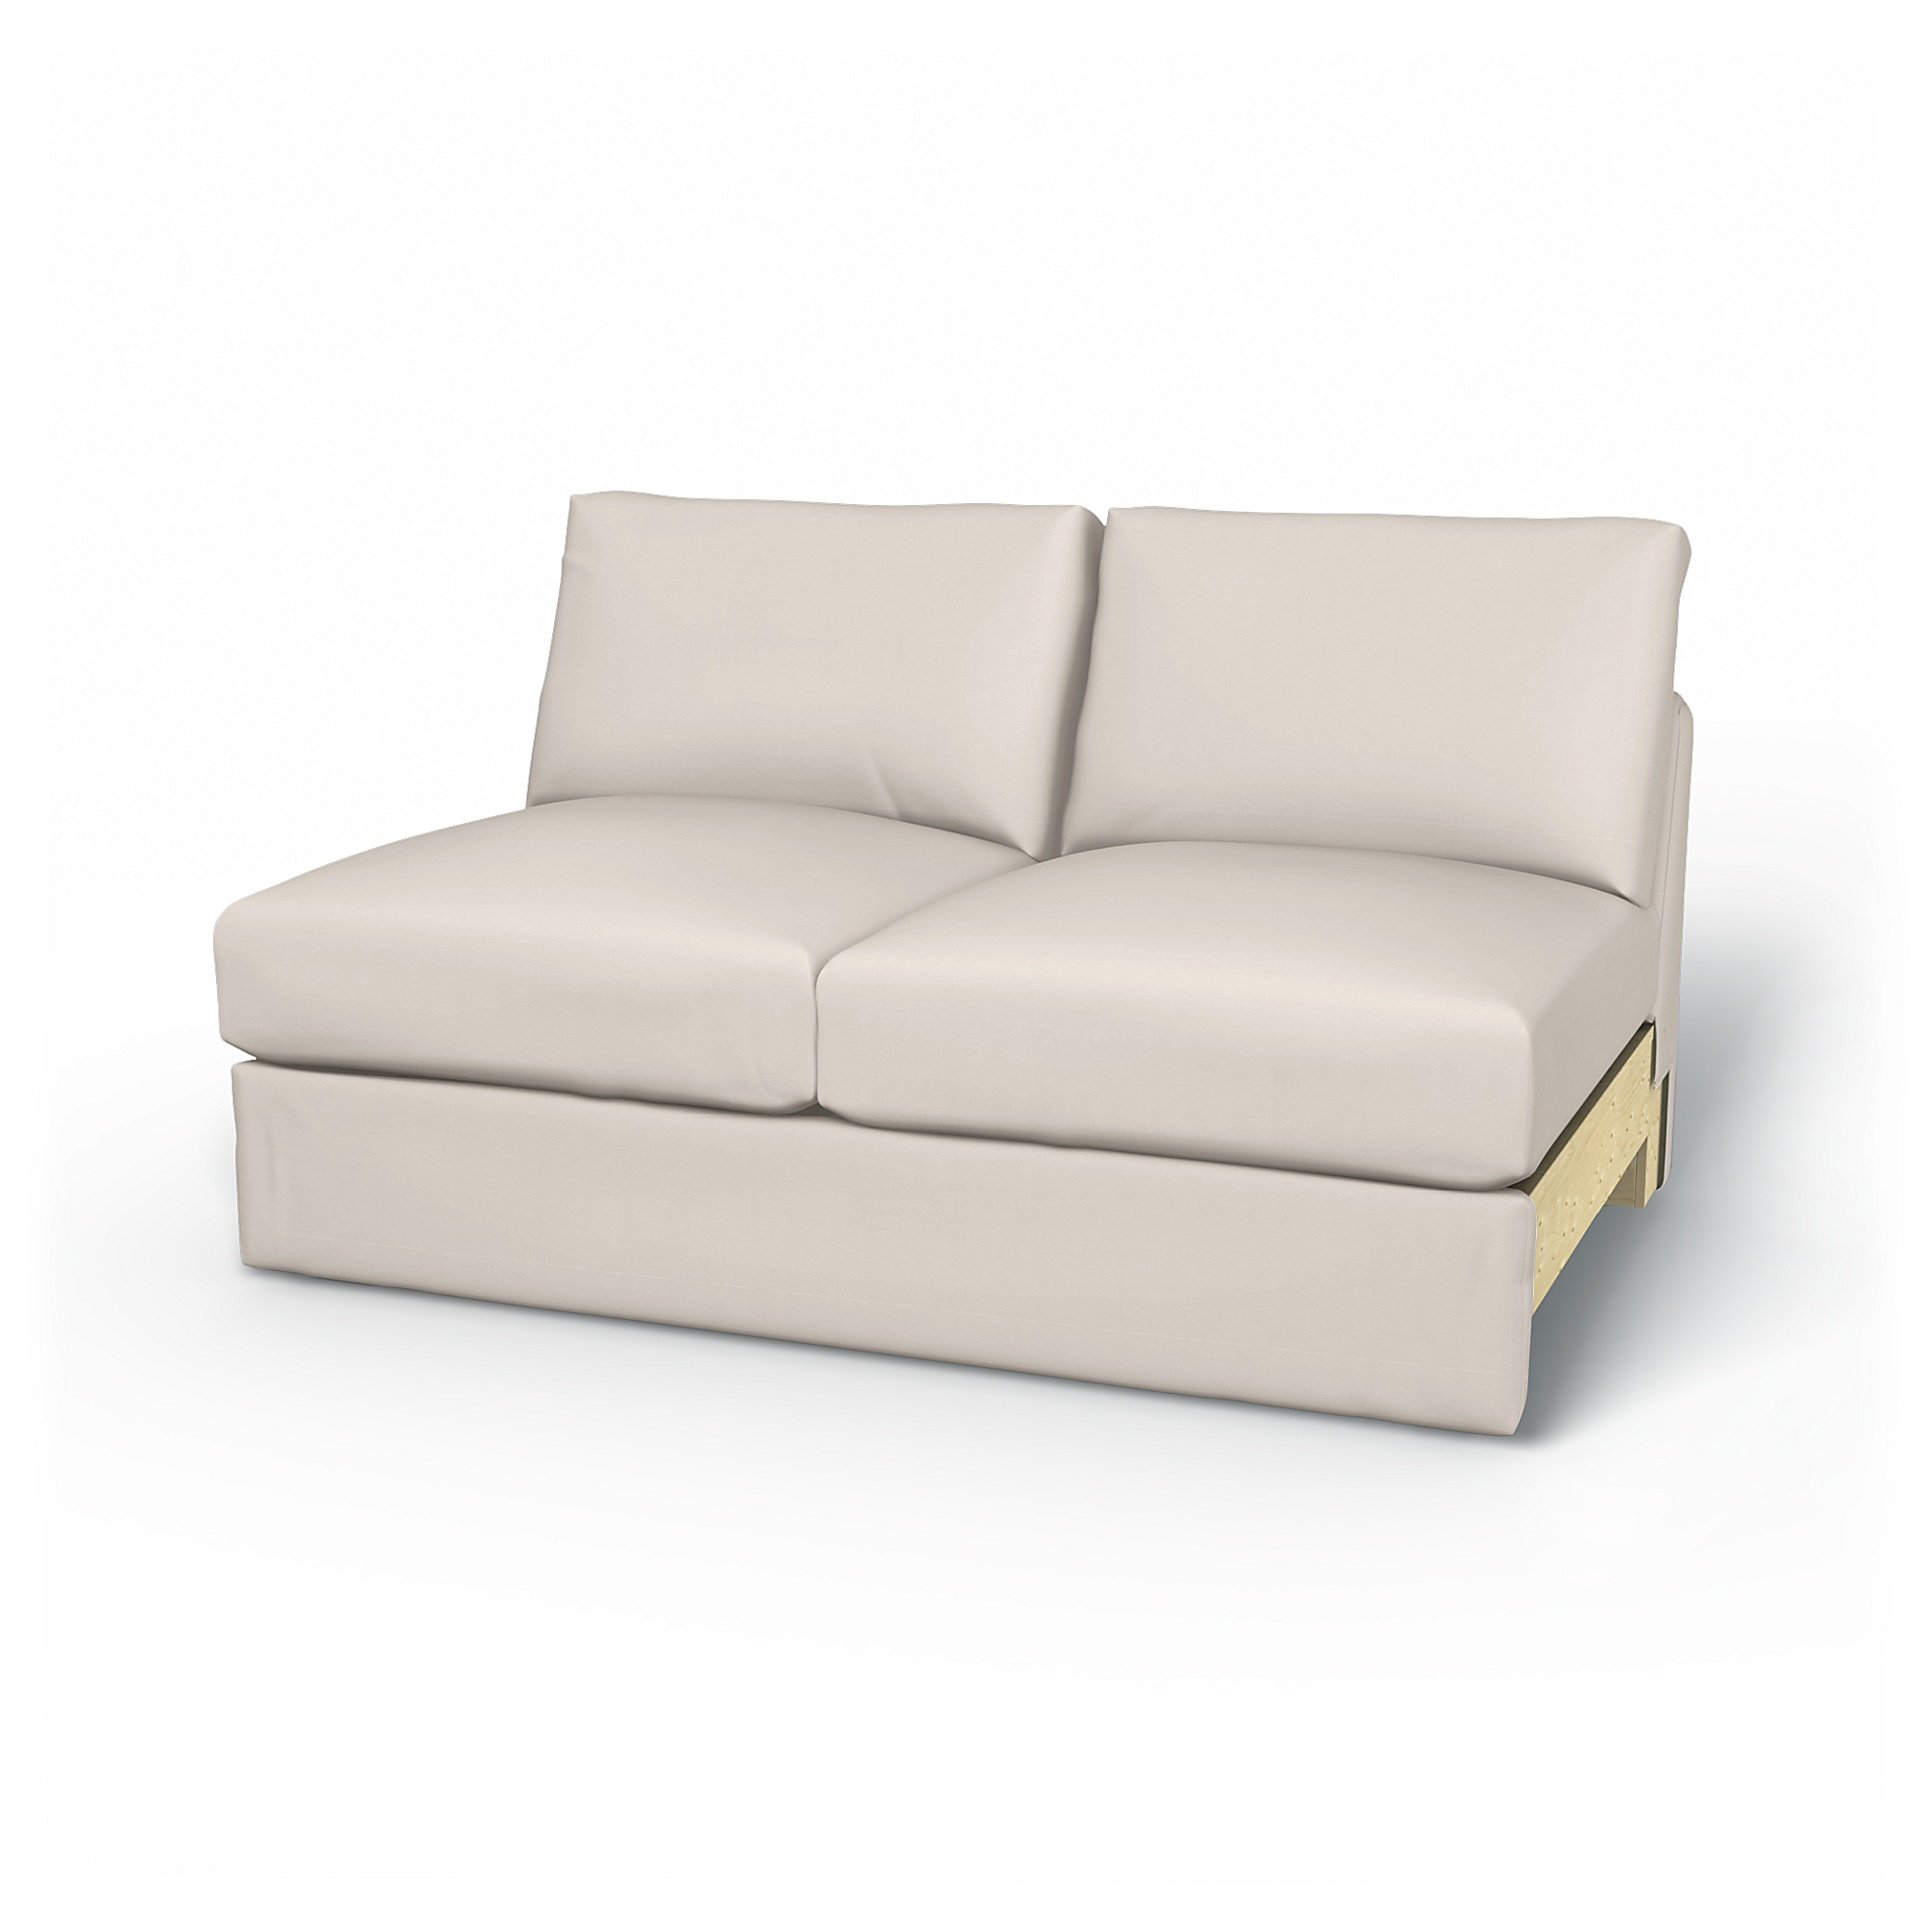 IKEA - Vimle 2 seater bed sofa without armrests, Soft White, Cotton - Bemz